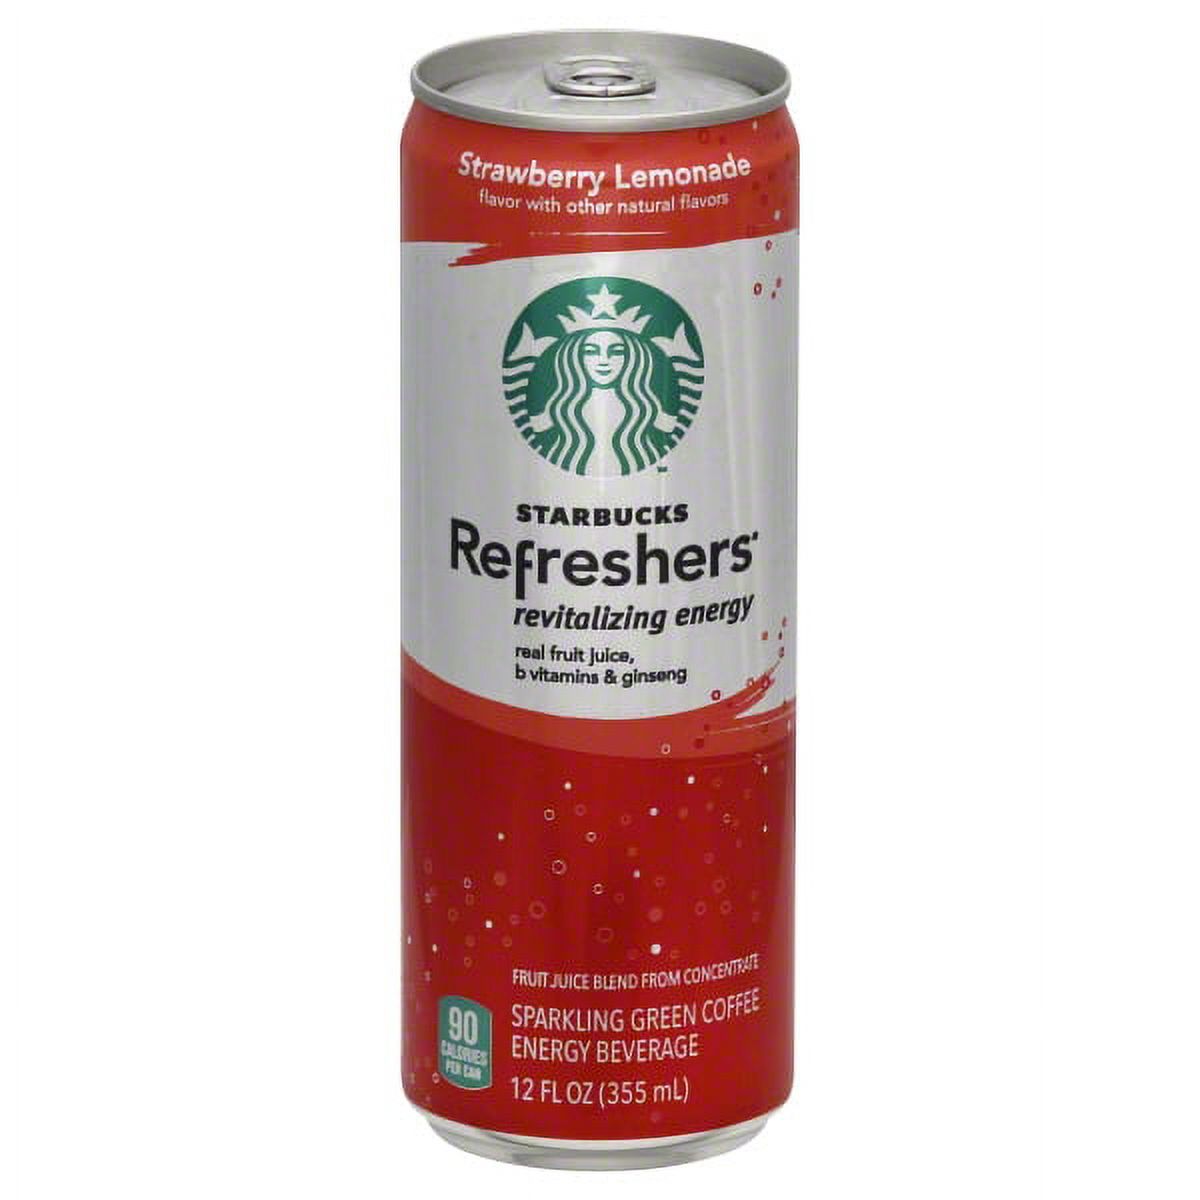 Starbucks Refreshers Strawberry Lemonade Sparkling Green Coffee Energy Beverage, 12 Fl. Oz. - image 1 of 4